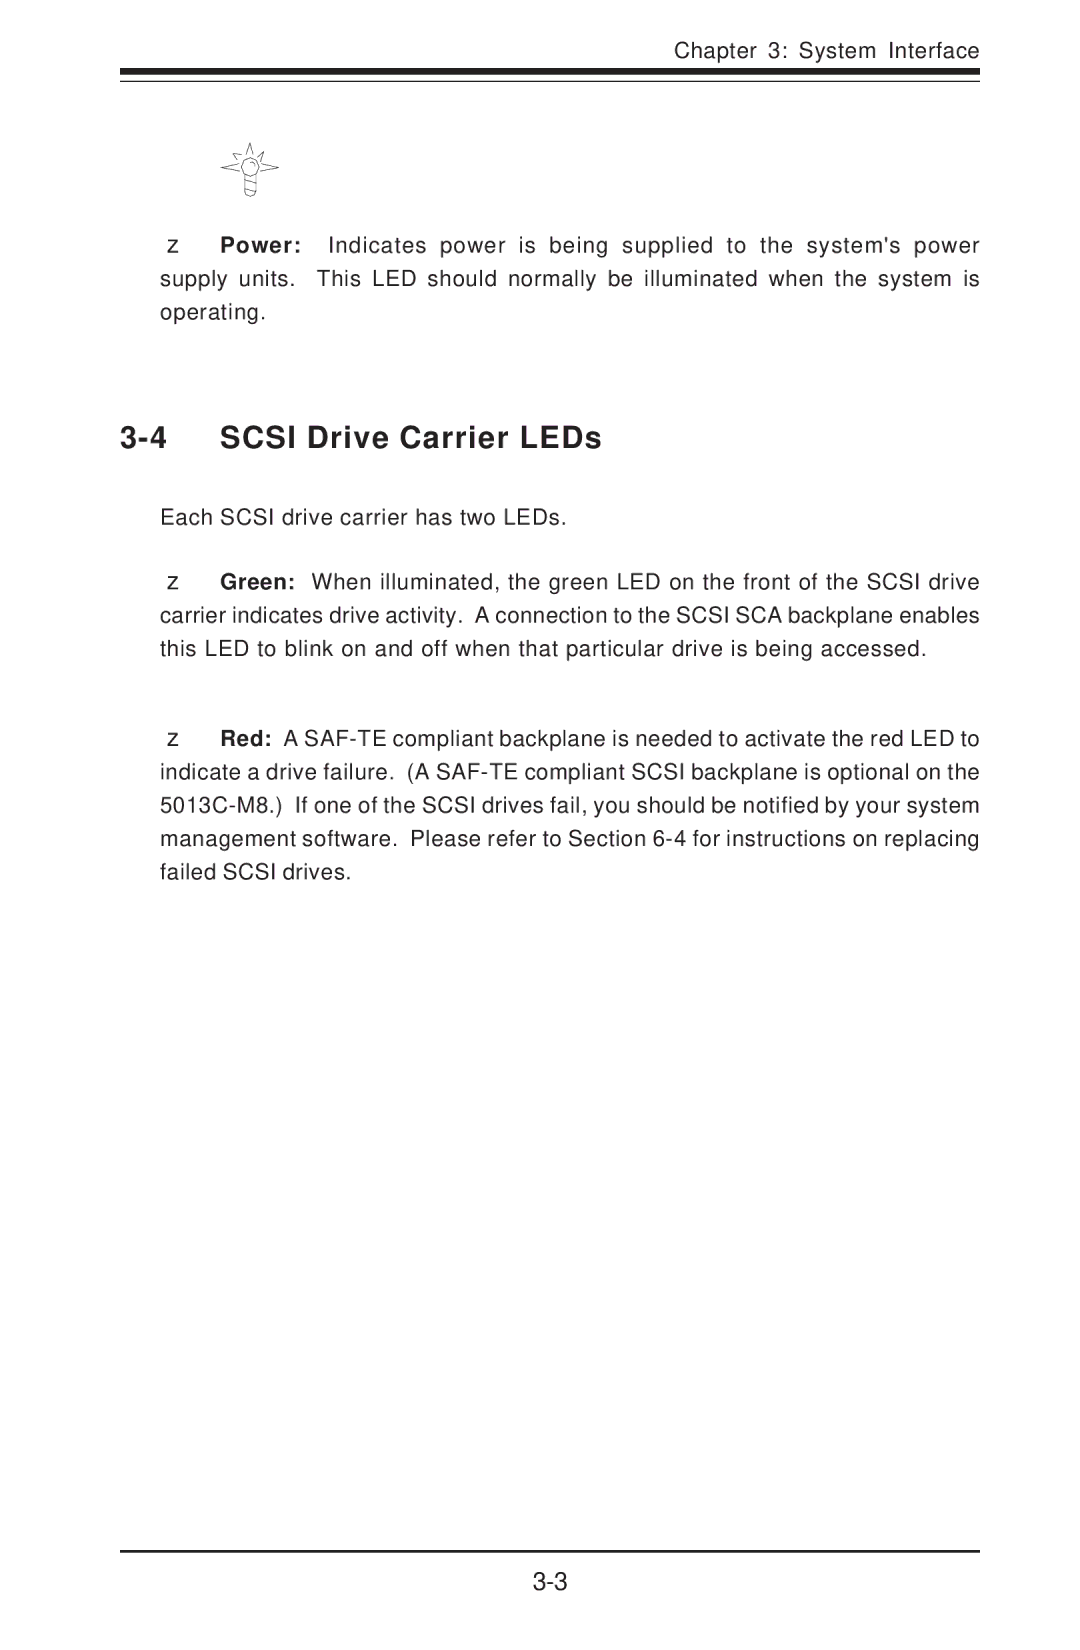 SUPER MICRO Computer 5013C-M8 user manual Scsi Drive Carrier LEDs 